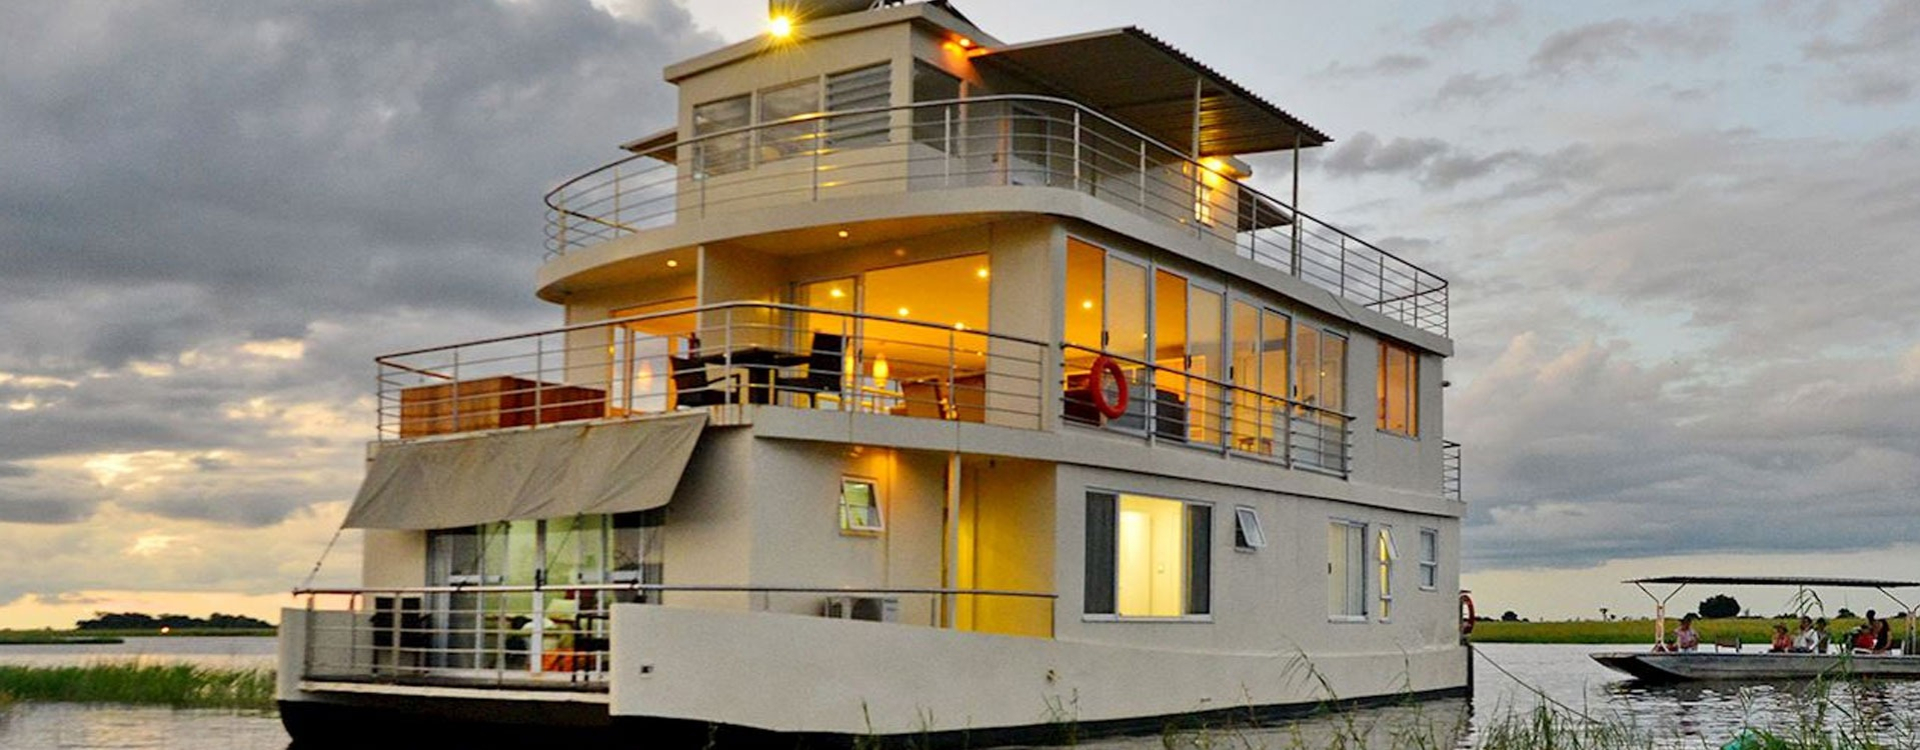 botswana houseboat safari